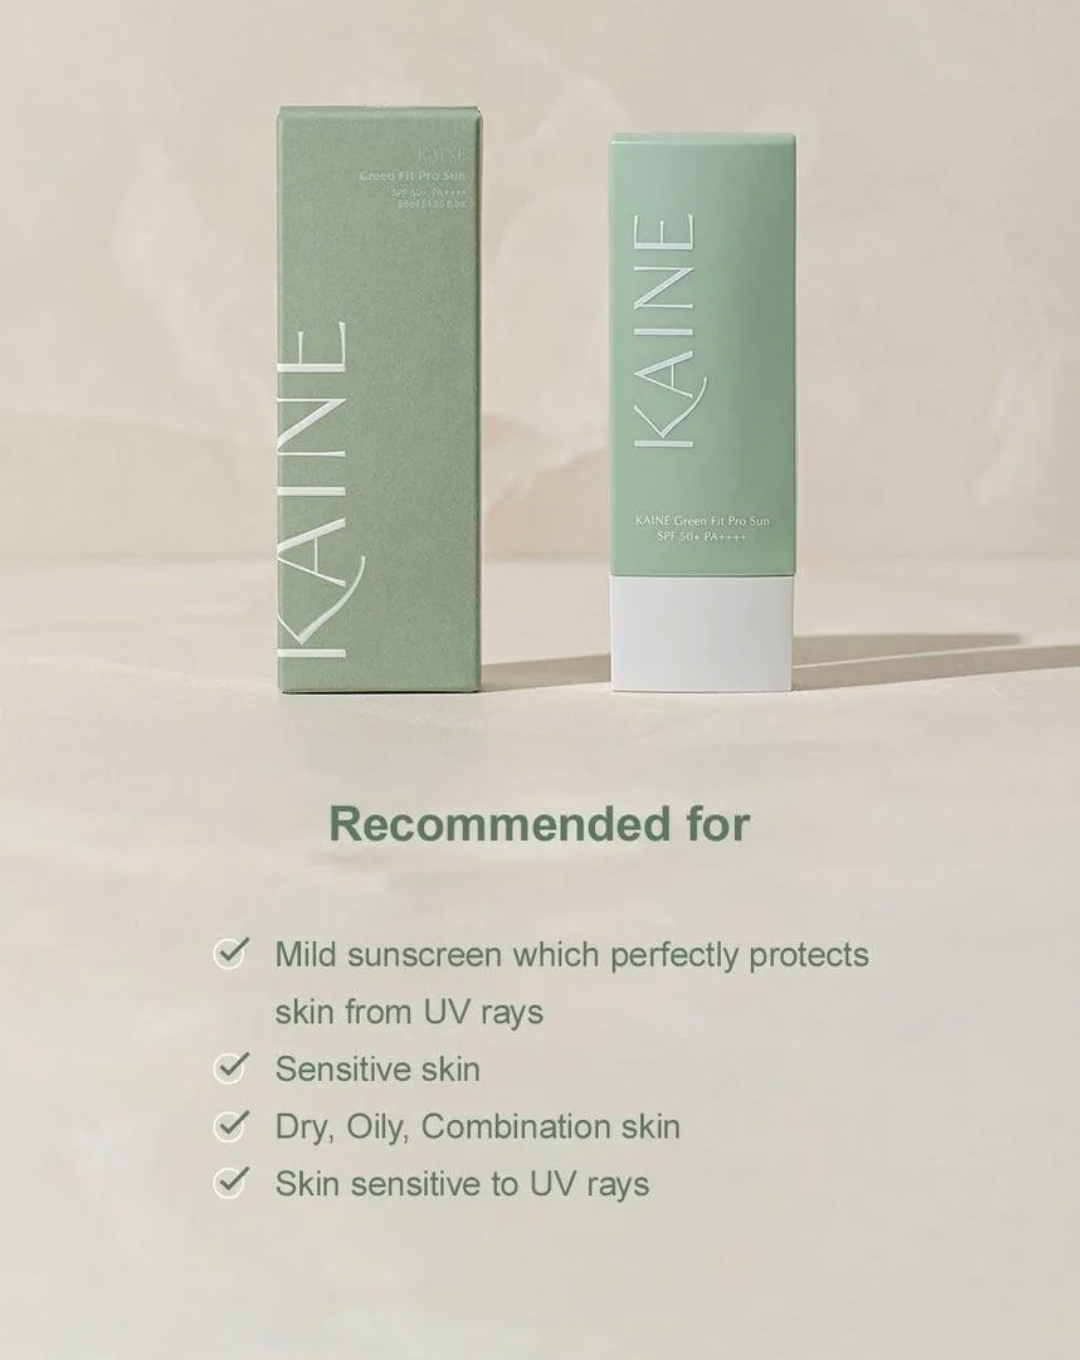 KAINE - Green Fit Pro Sun SPF 50+ Sunscreen